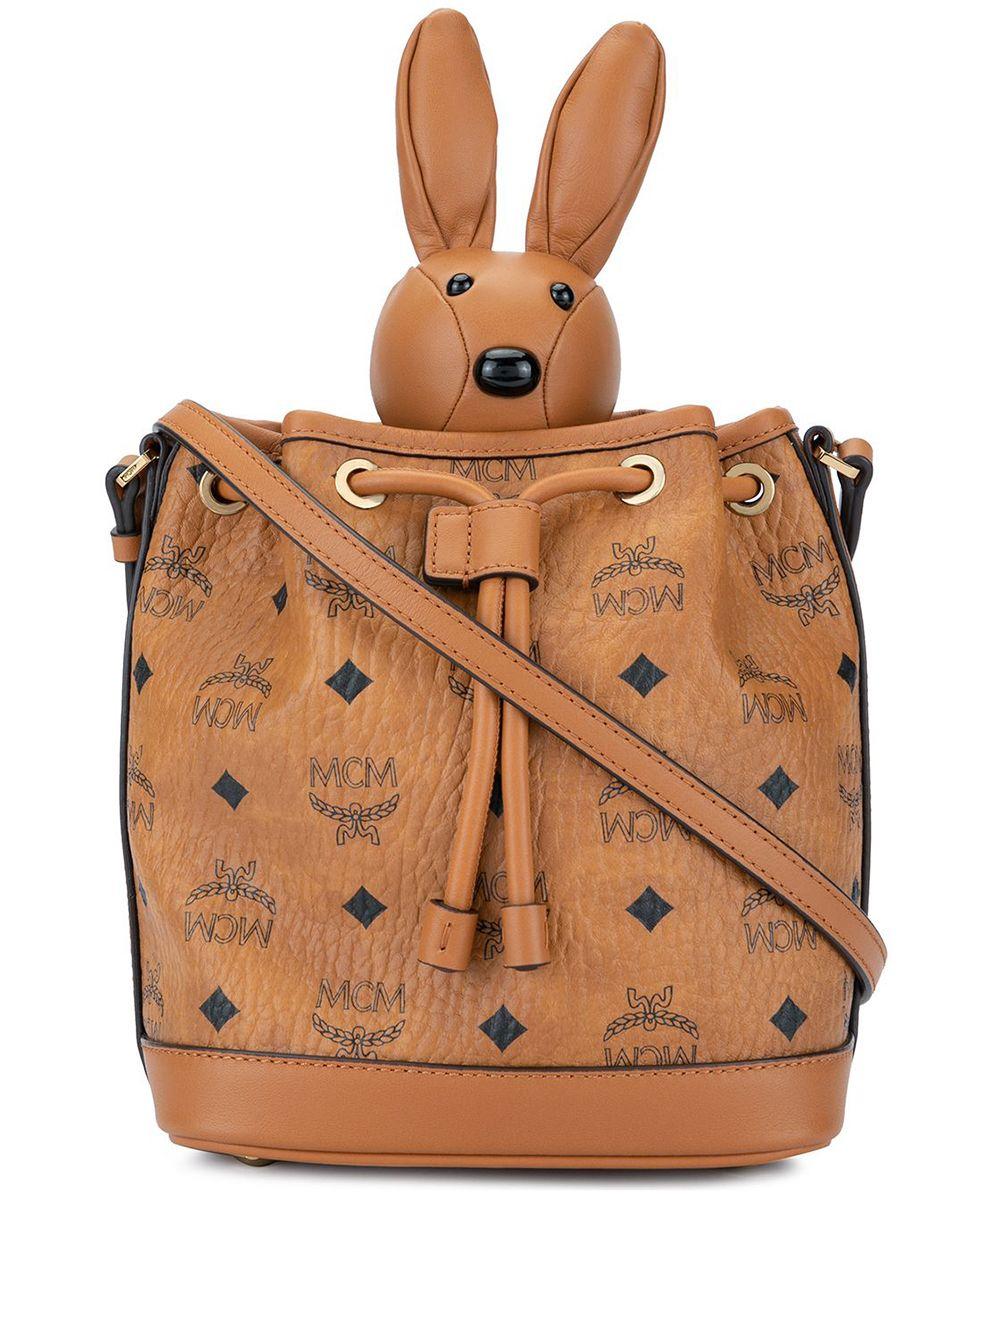 MCM Leather Rabbit Bucket Bag in Brown - Lyst